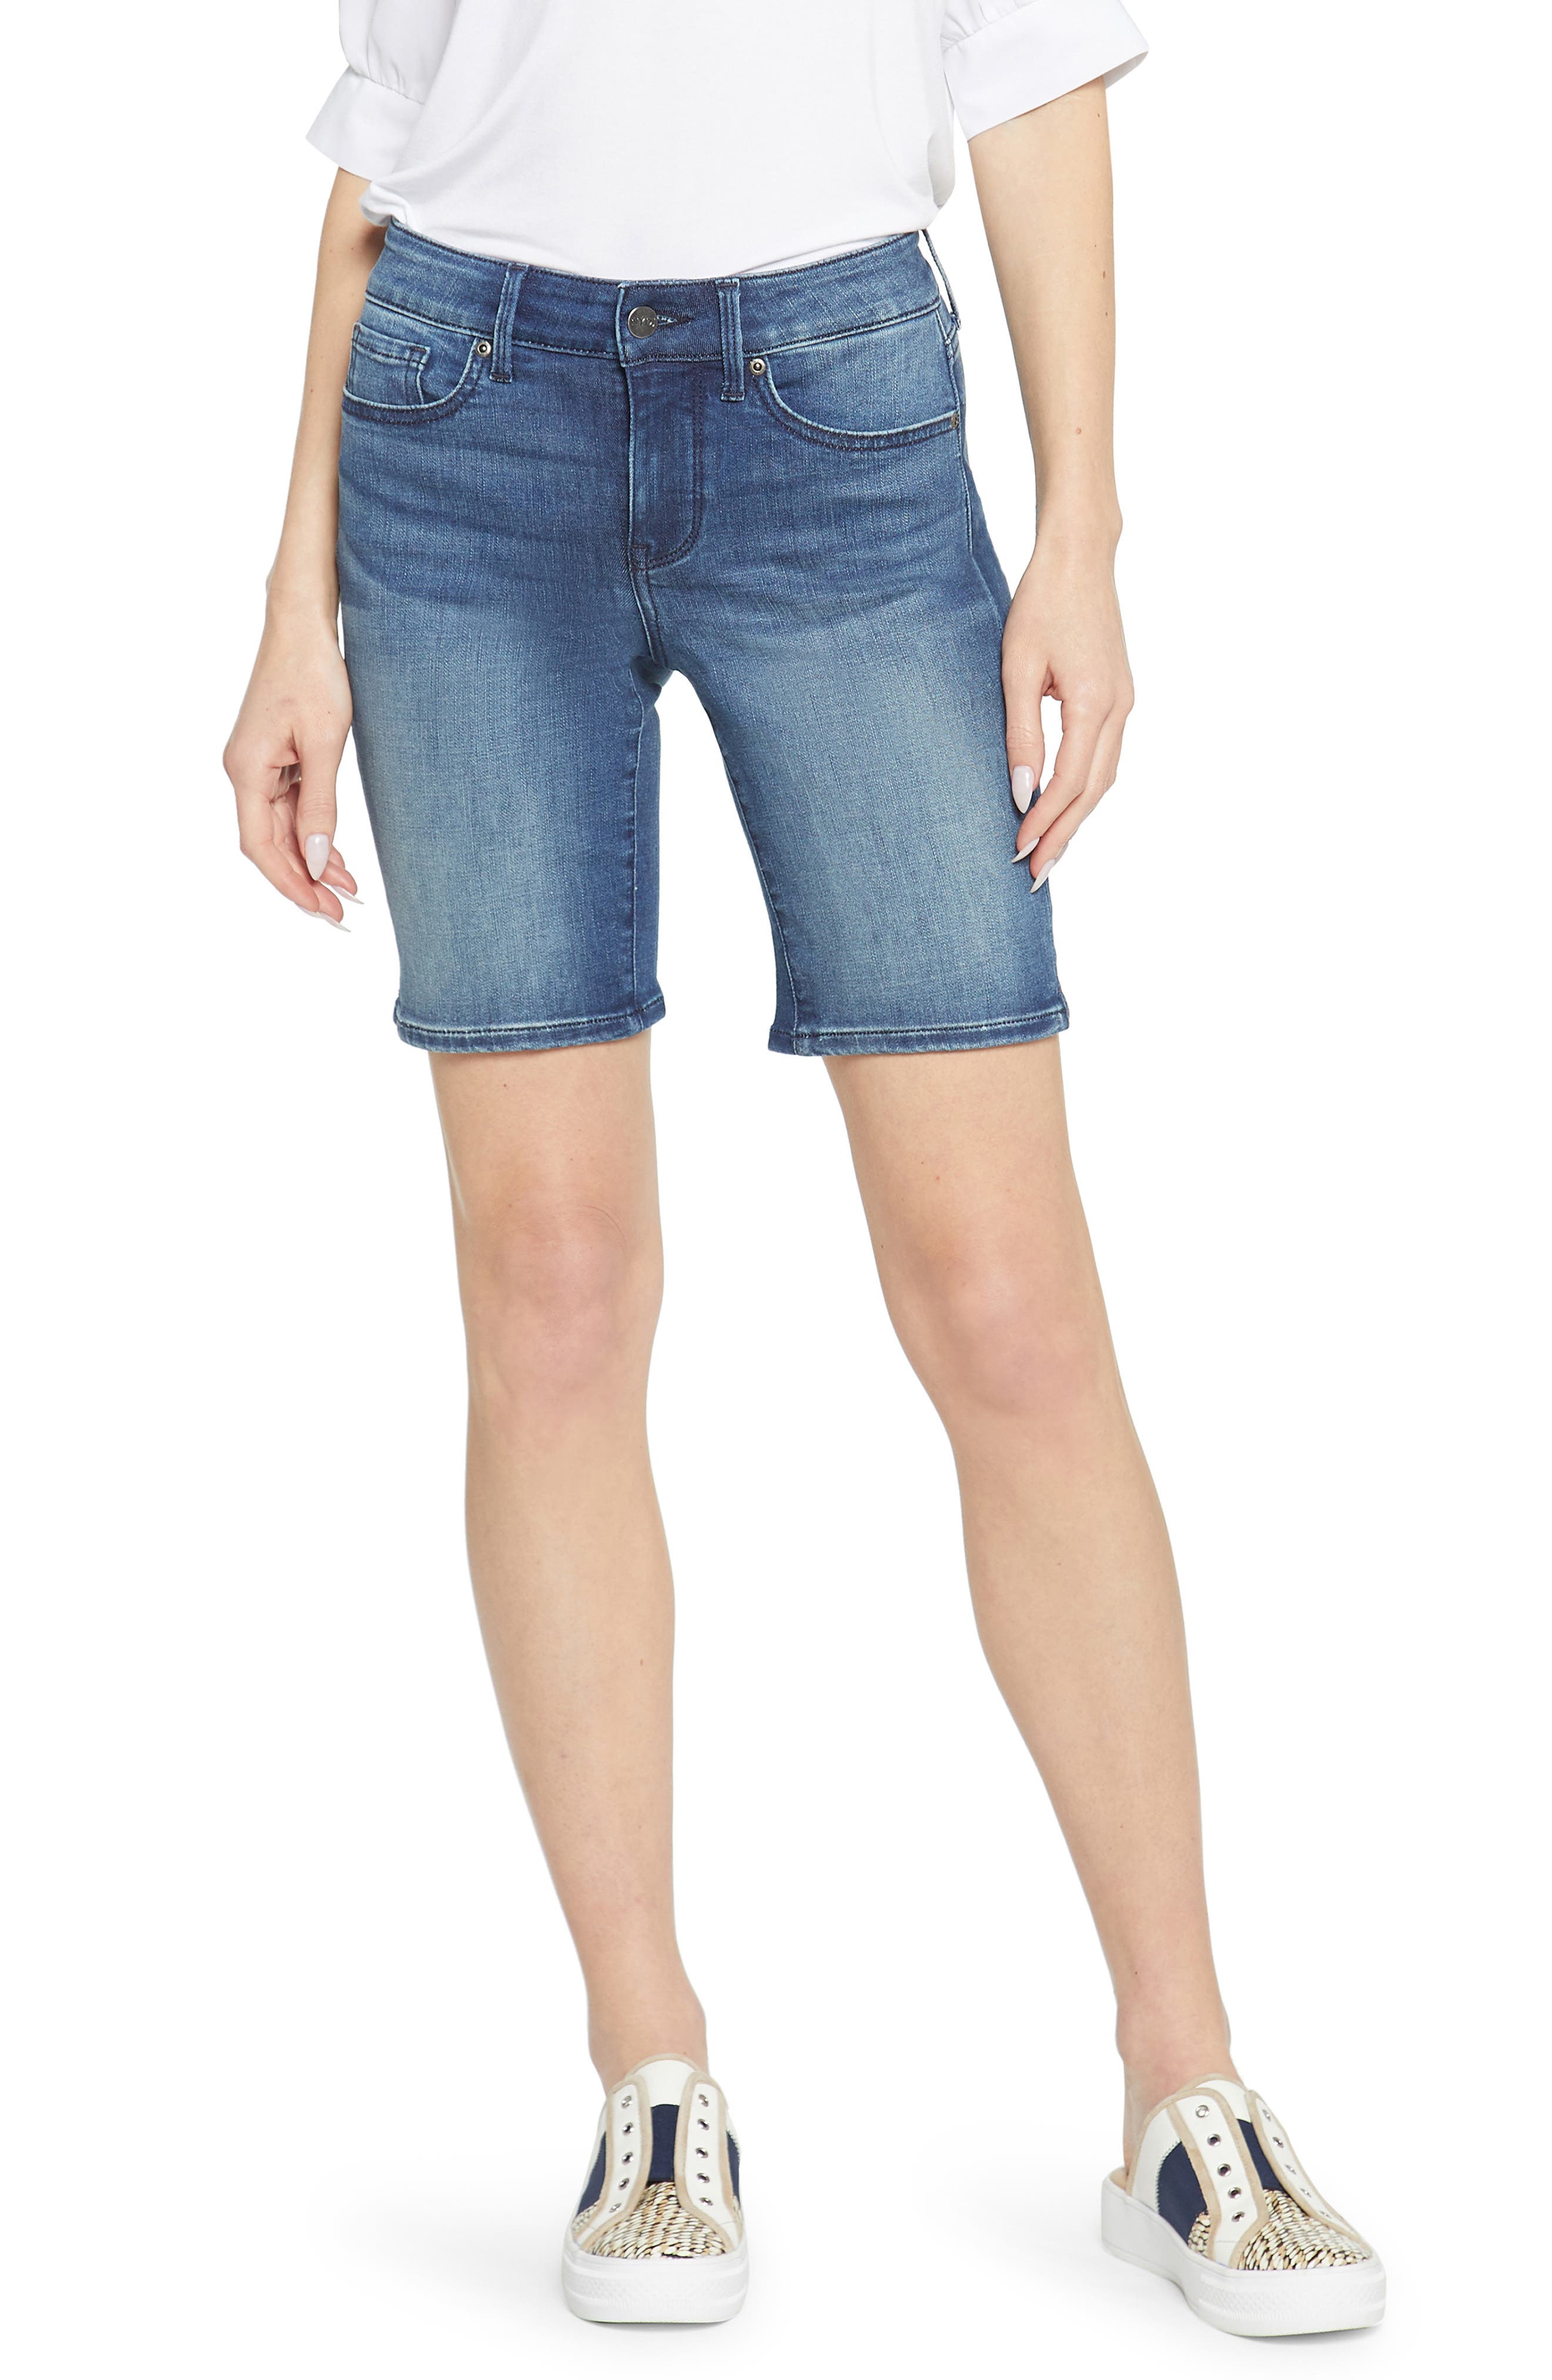 NYDJ Not Your Daughter Jeans Bermuda Premium Denim Cooper shorts 6  8 12 14 16 